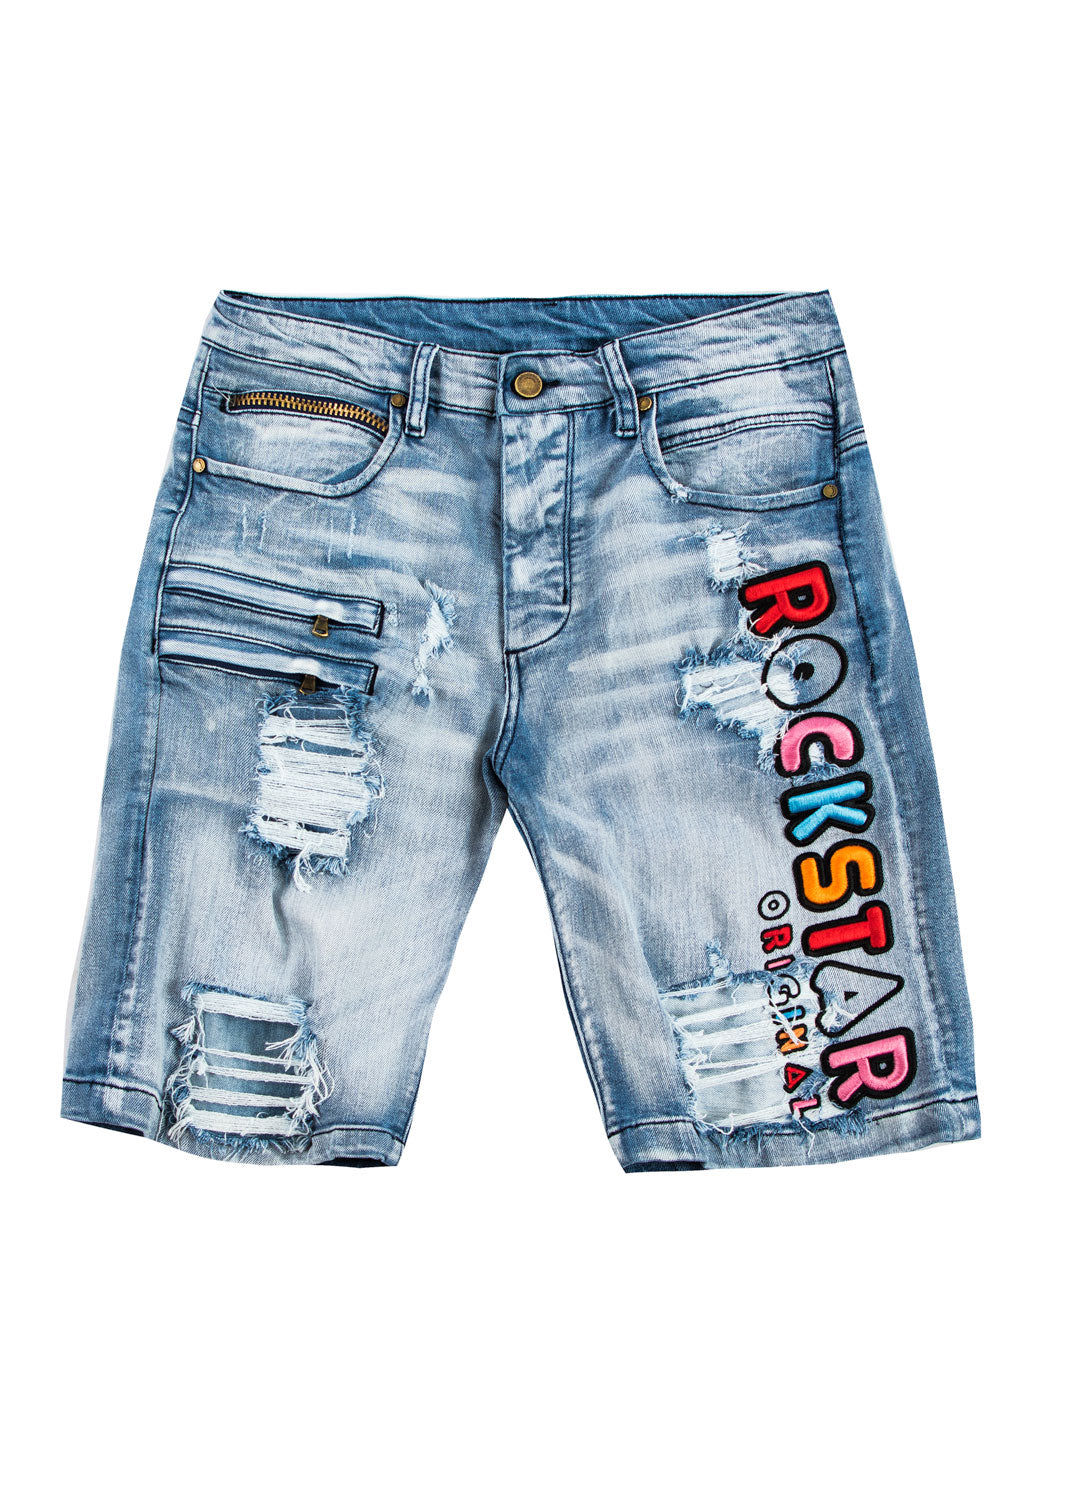 rockstar jean shorts